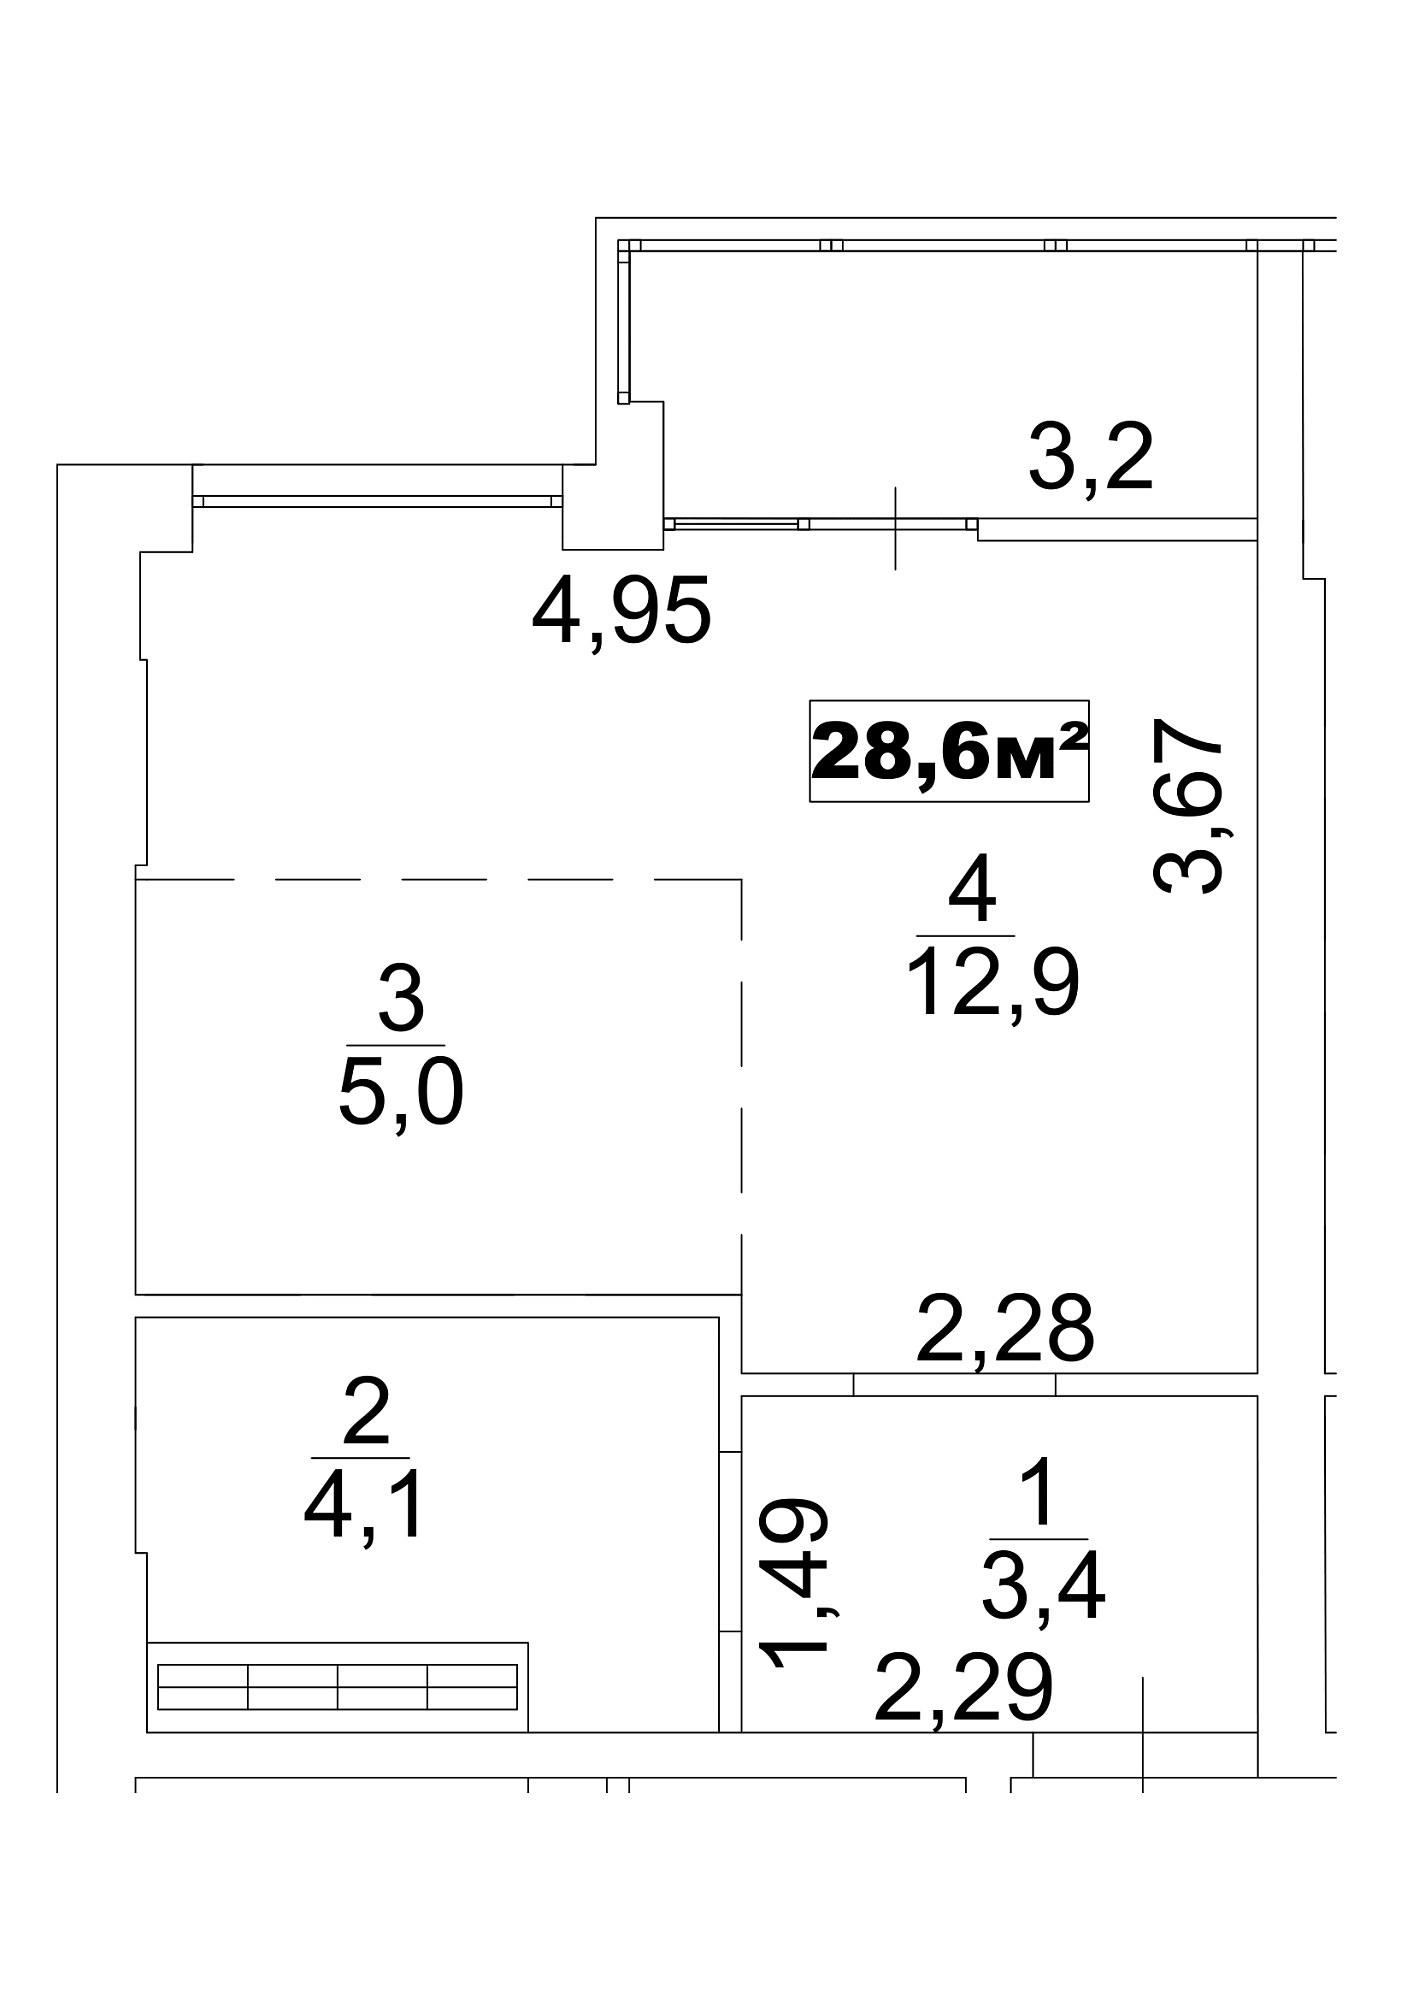 Planning Smart flats area 28.6m2, AB-13-08/0063б.